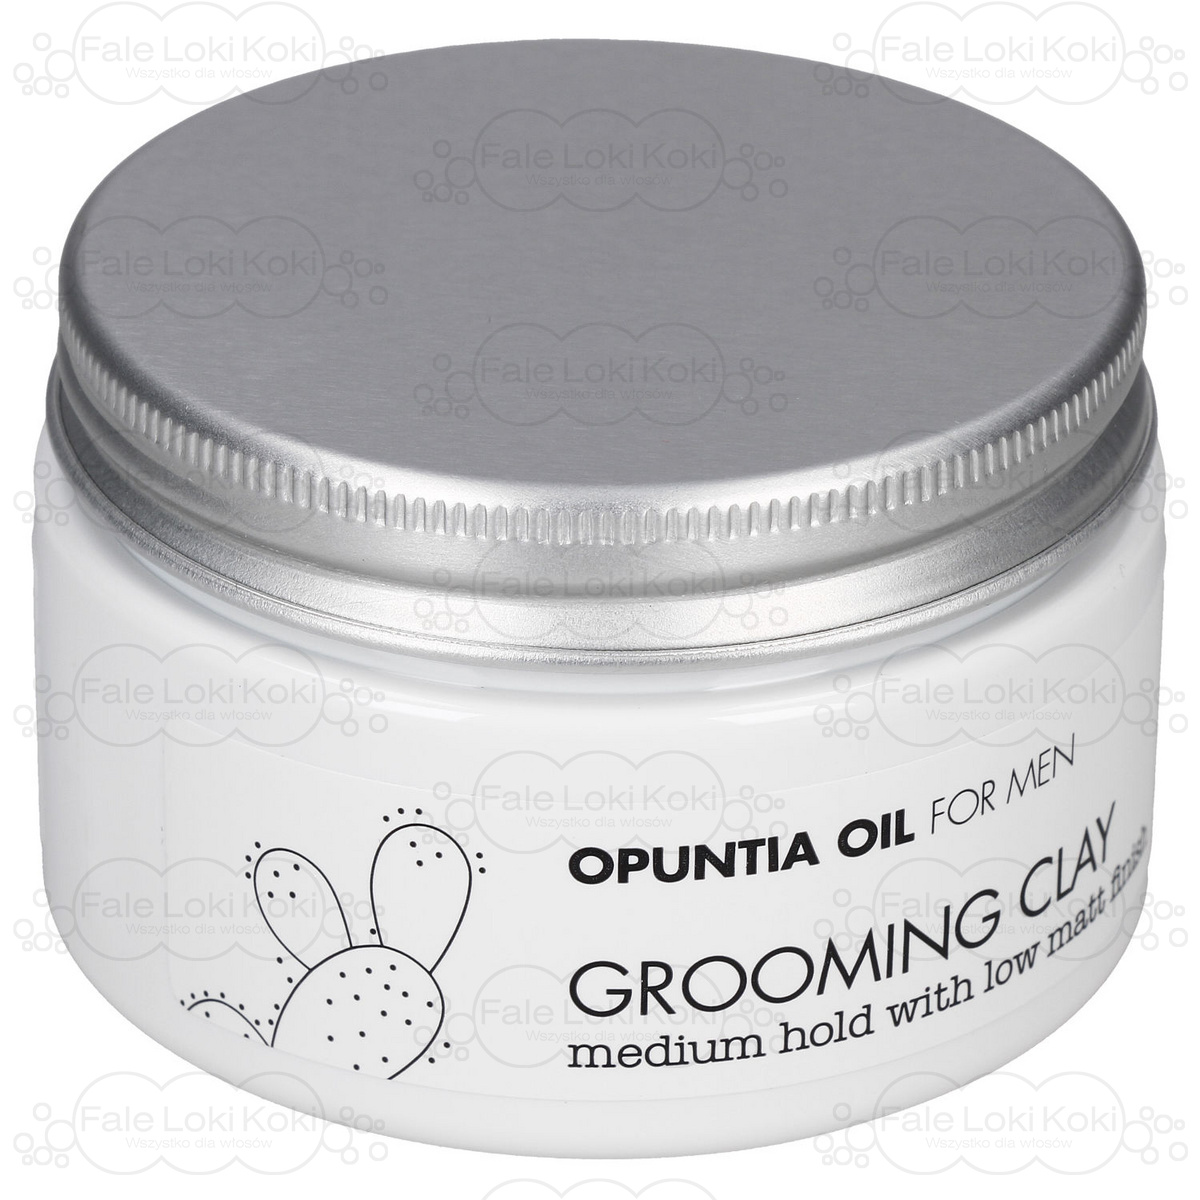 RICA OPUNTIA OIL FOR MEN glinka modelująca Grooming Clay  100 ml